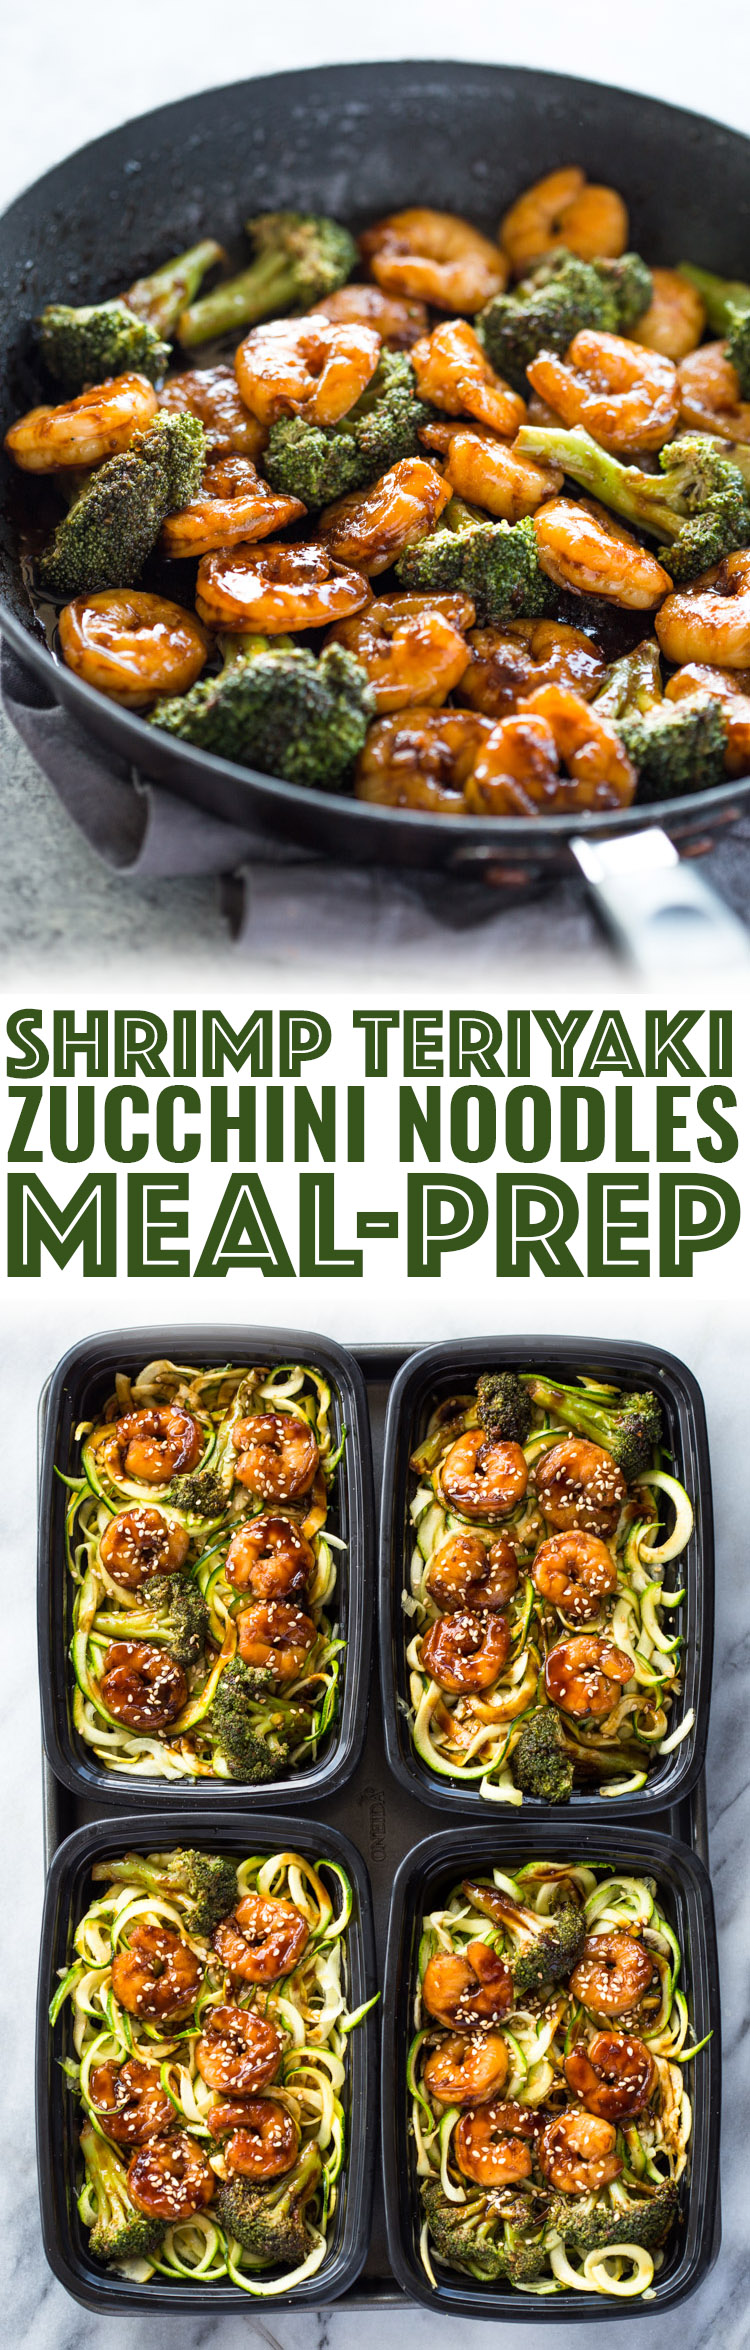 Shrimp Teriyaki Zucchini Noodles Meal-Prep (174 calories!)